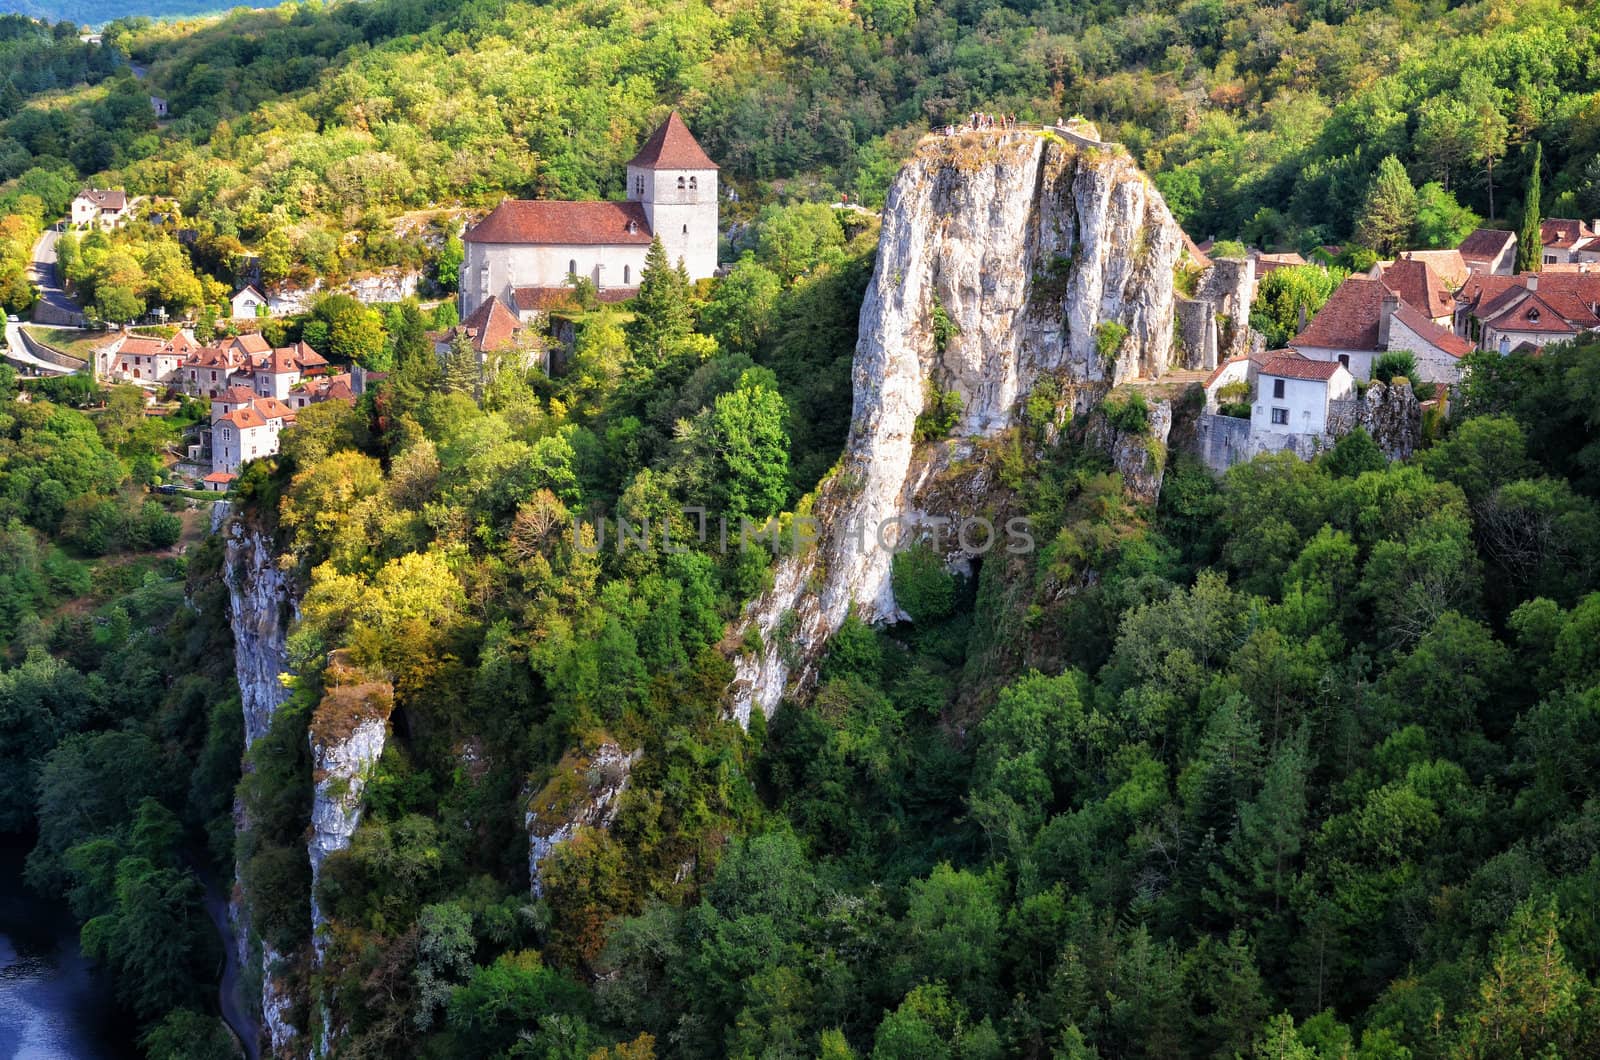 Cirq la Popie village on the cliffs scenic landscape view, France